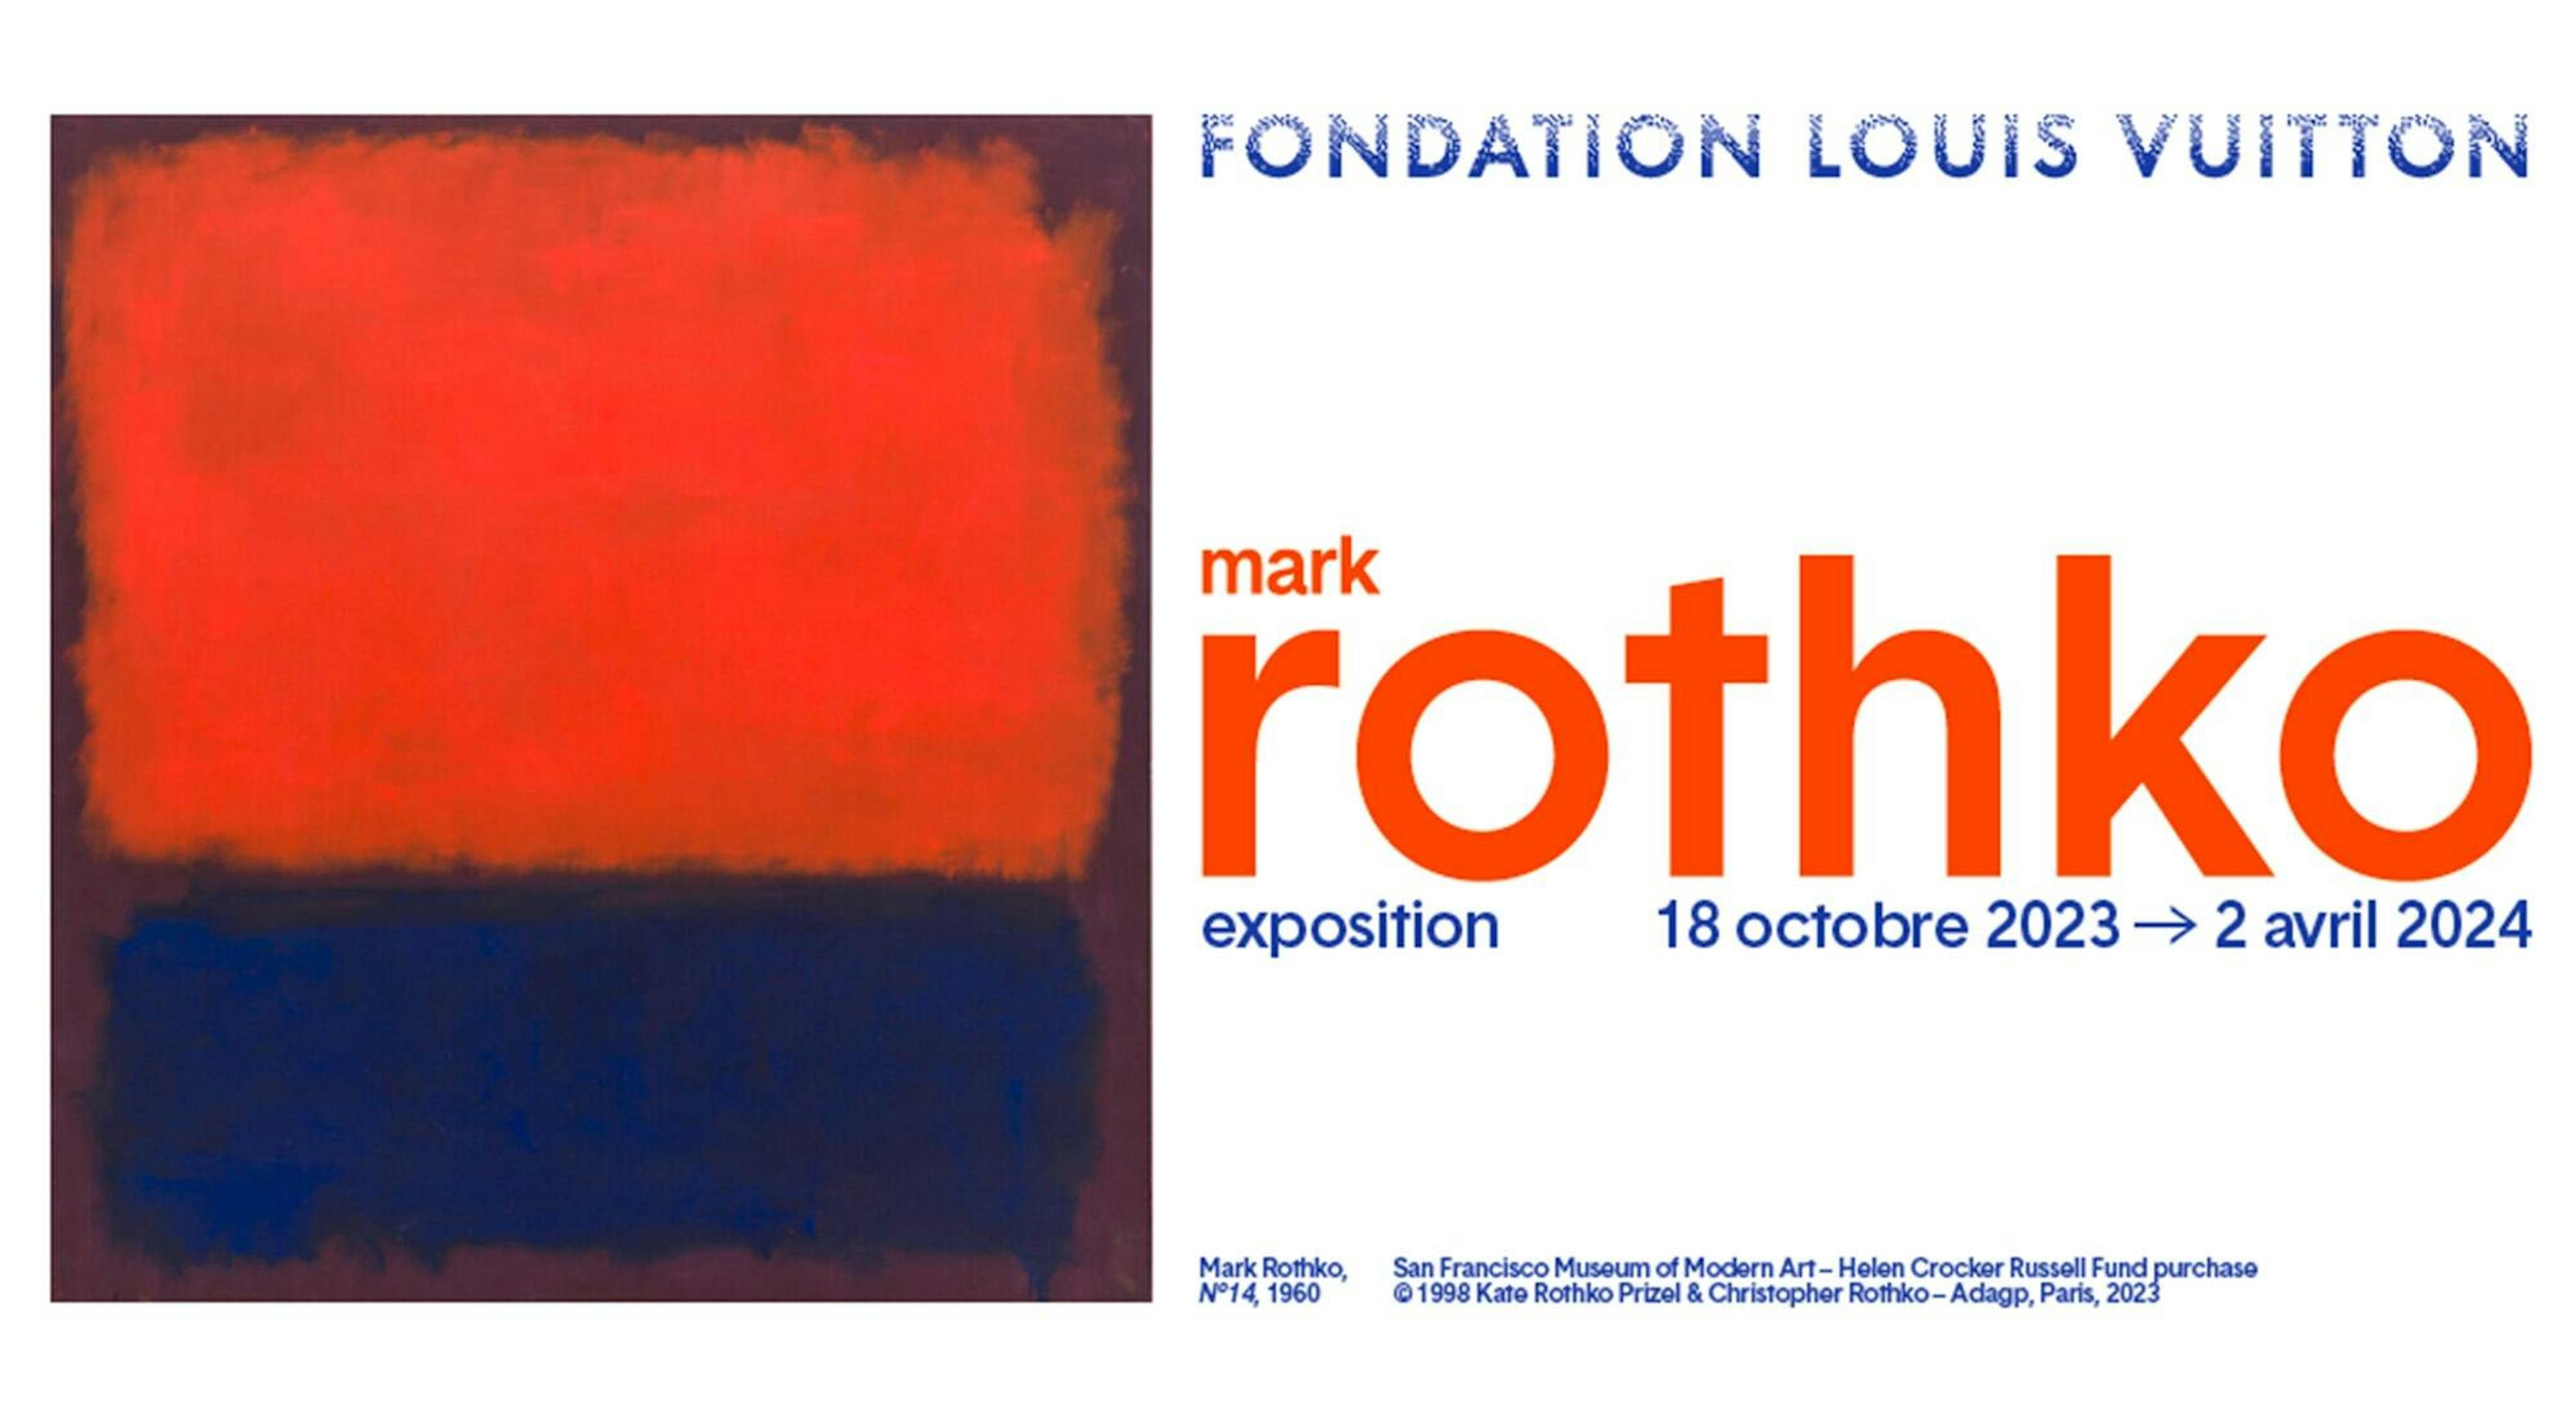 Cover Fondation Louis Vuitton hosts major Mark Rothko retrospective from October 18